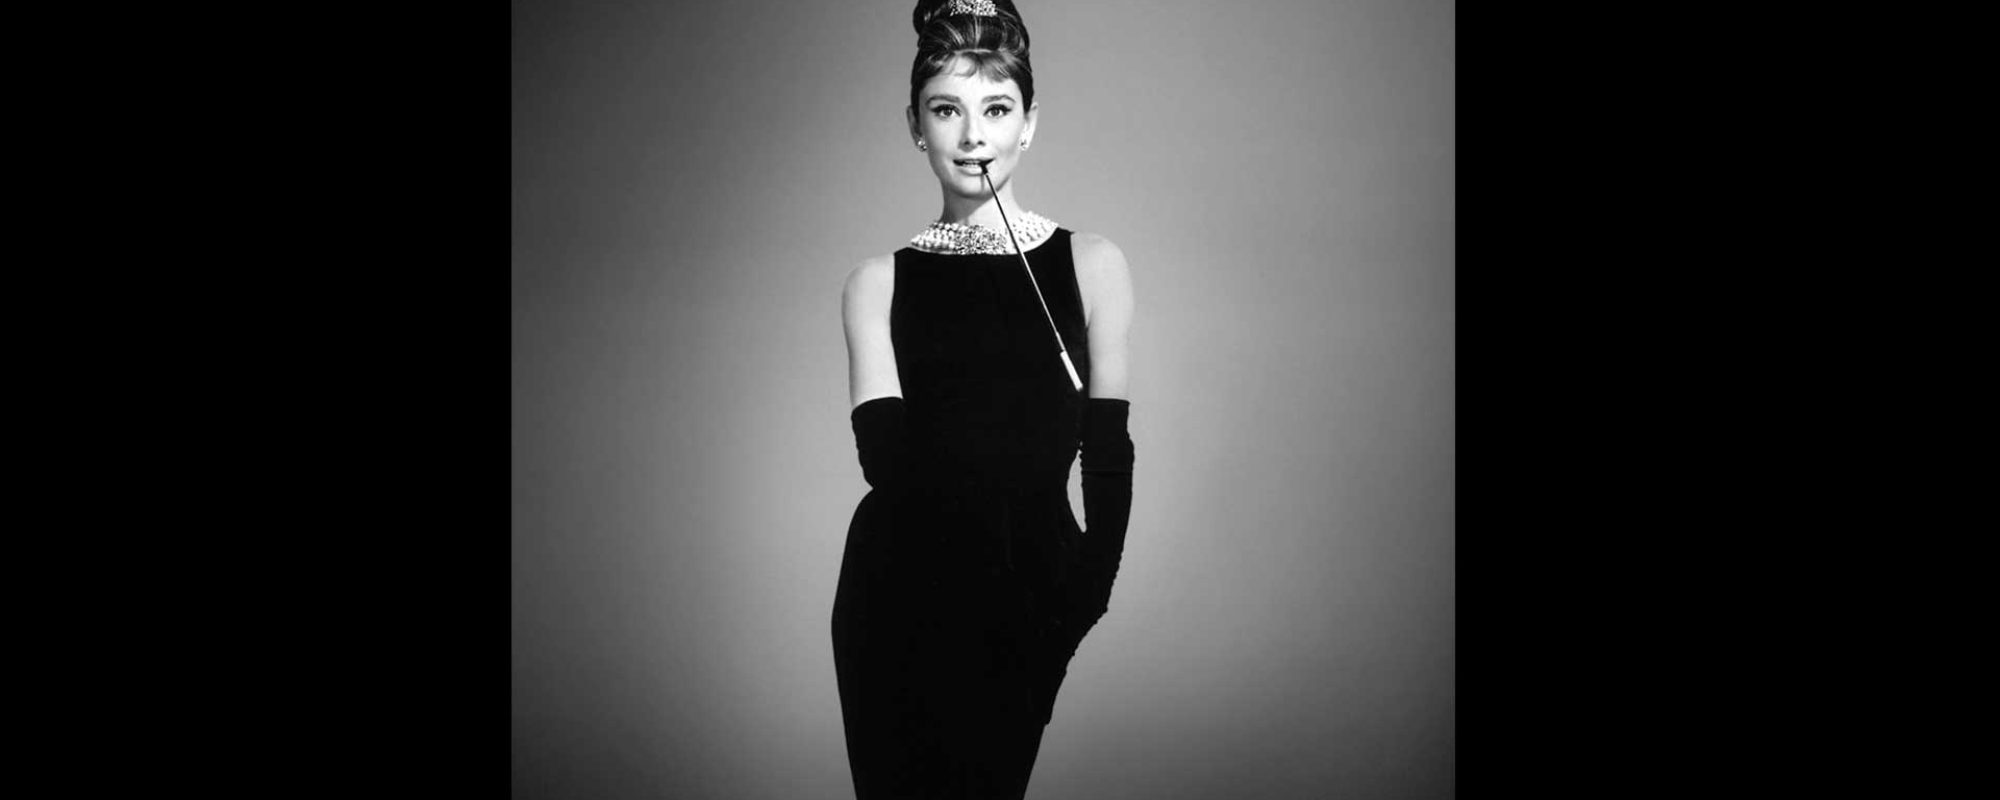 Little-Black-Dress Designer, Hubert de Givenchy, Remembered